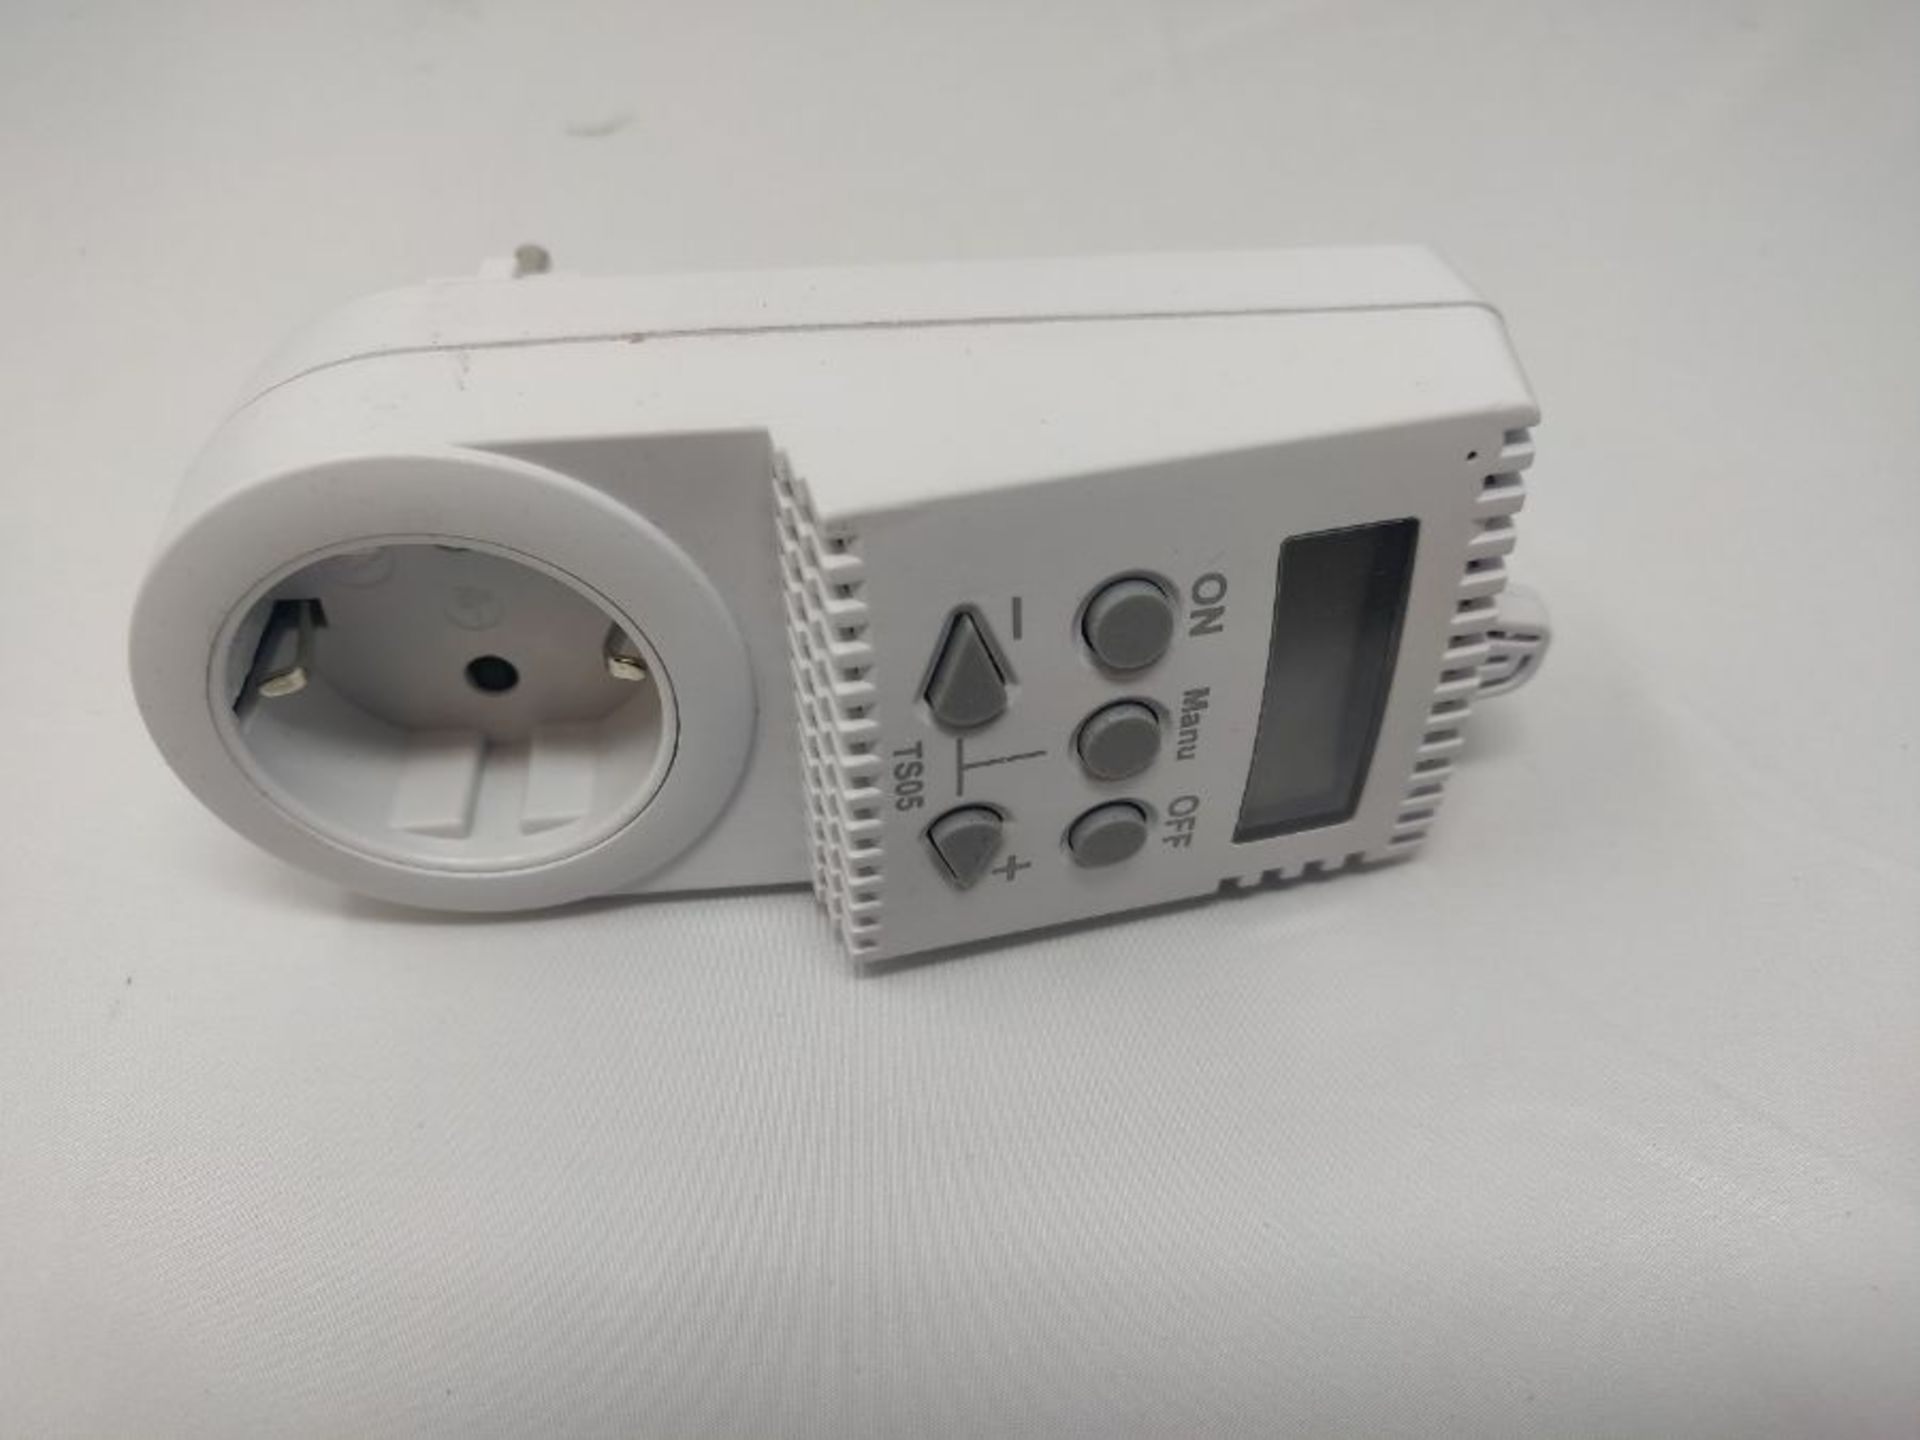 Elektrobock, Plug Thermostat TS05, Thermostat Infrared Heating. - Image 3 of 3